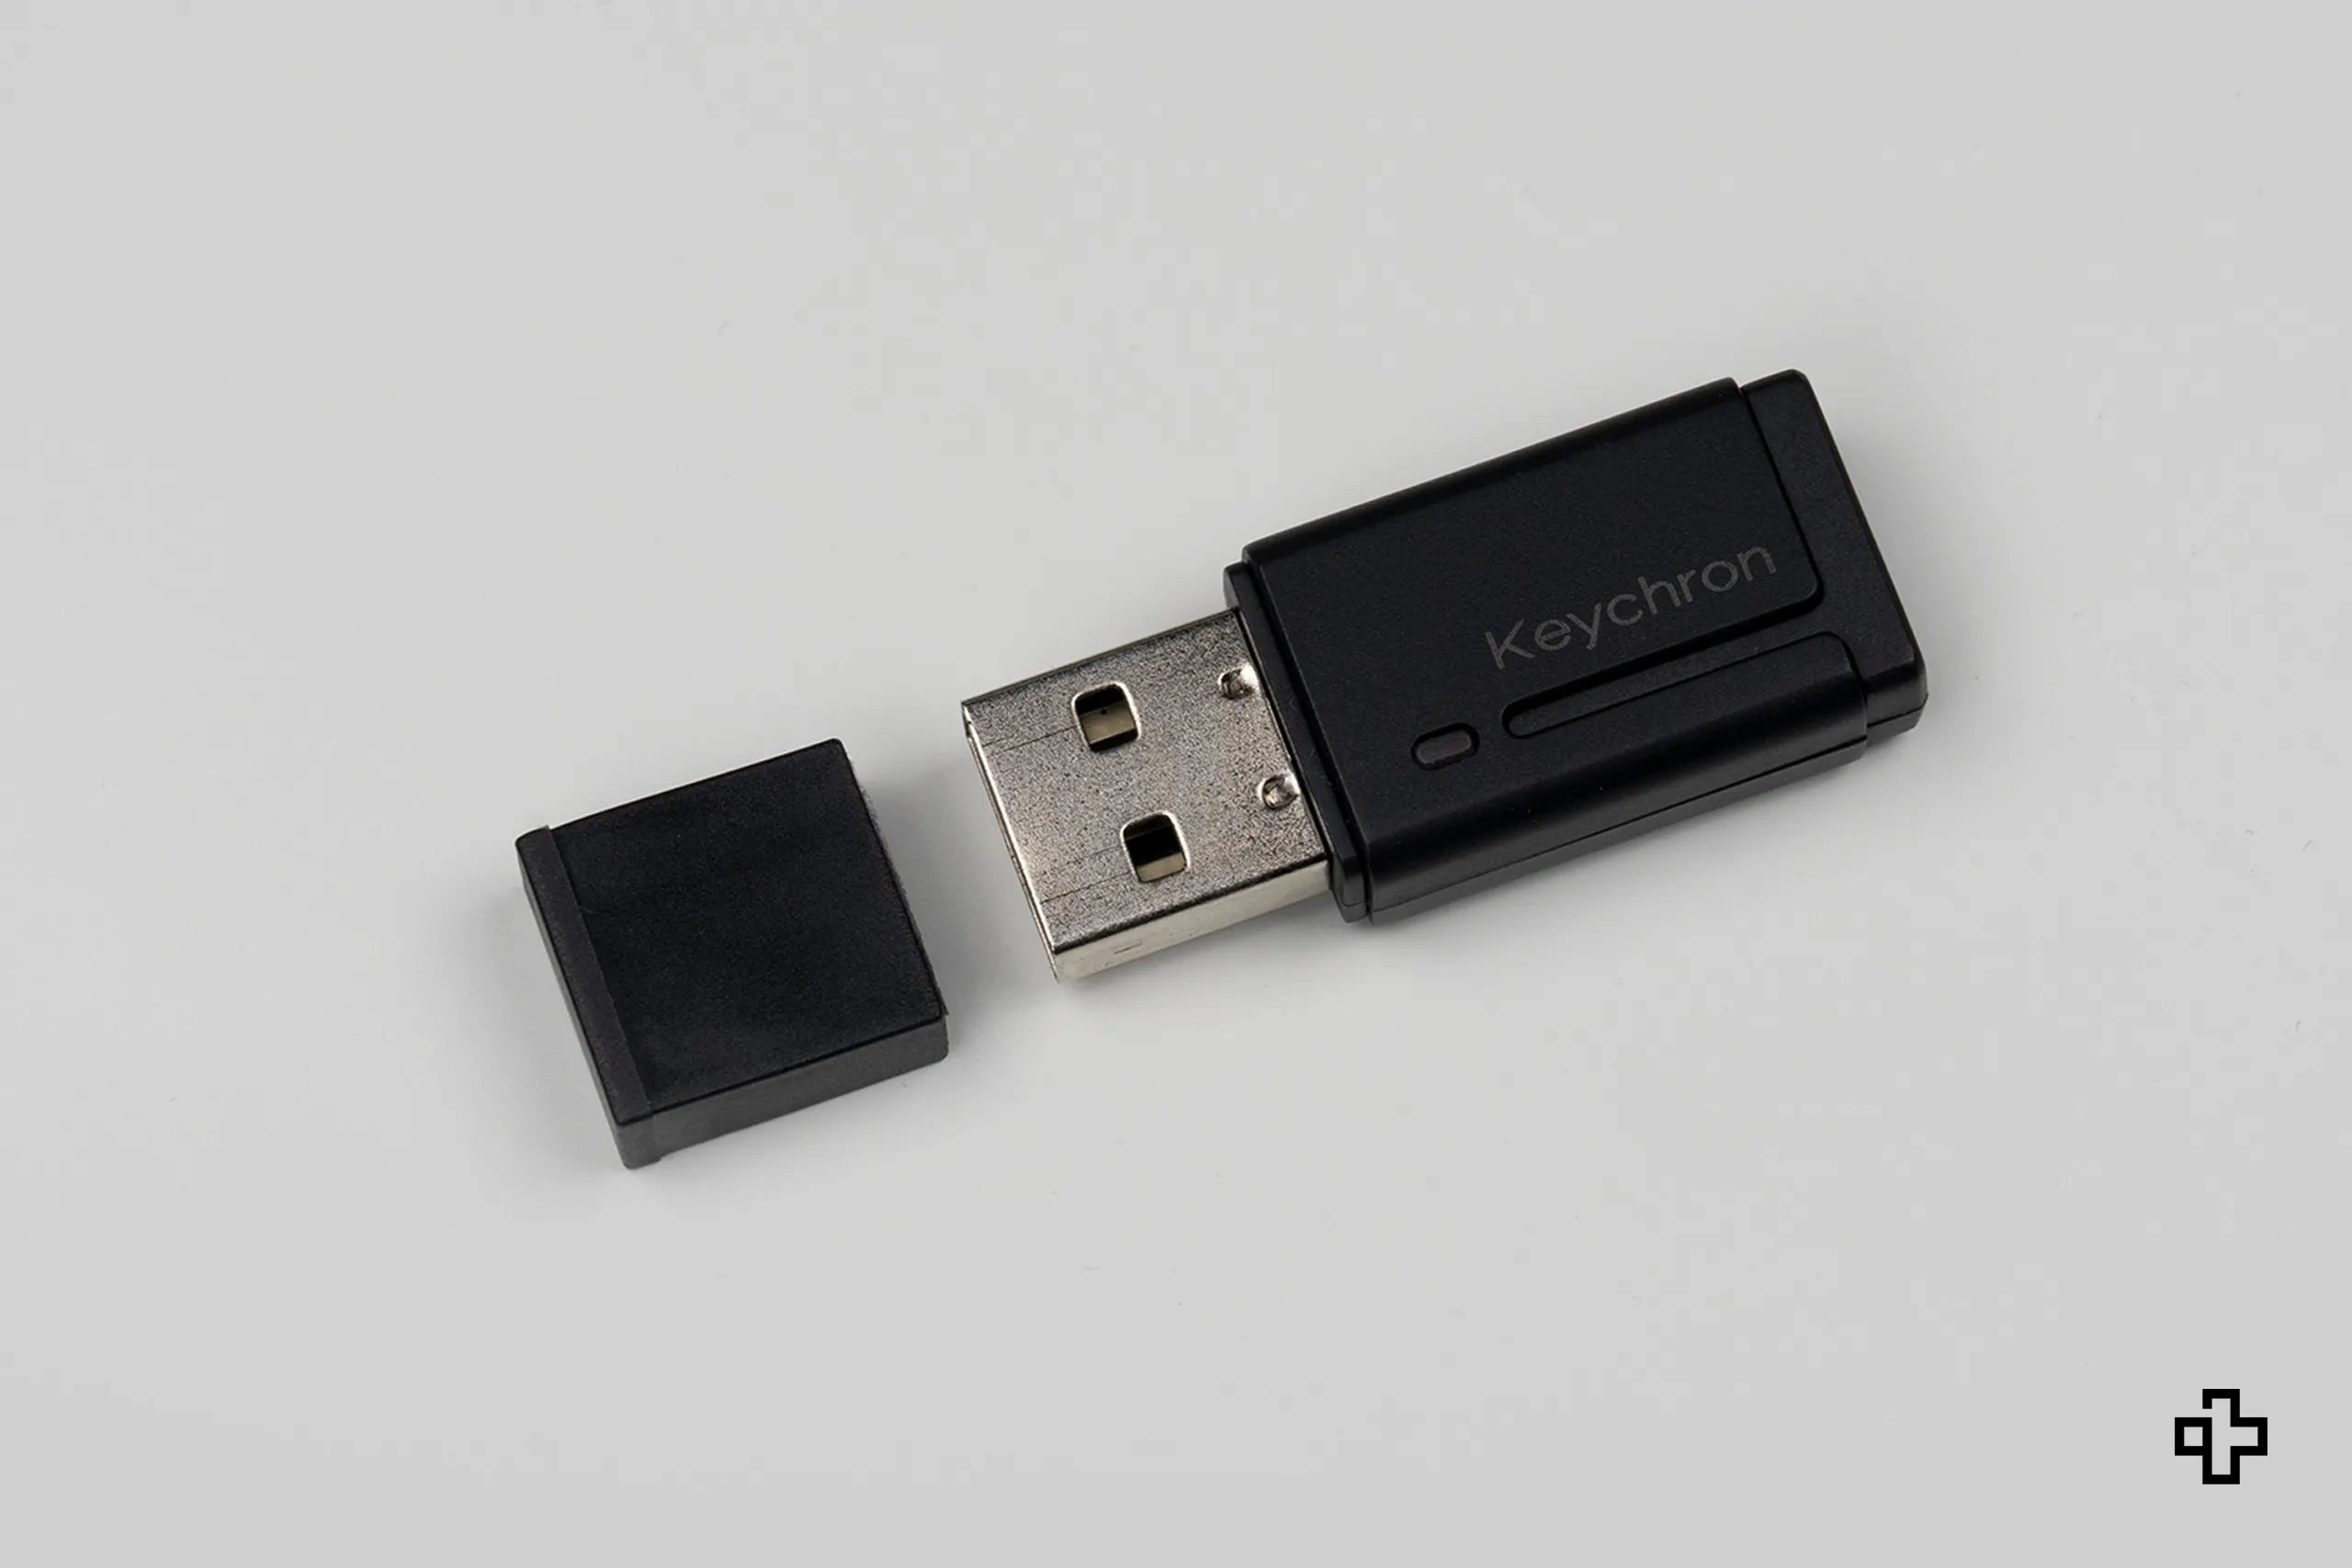 Keychron USB Bluetooth Adapter for Windows 5.0 